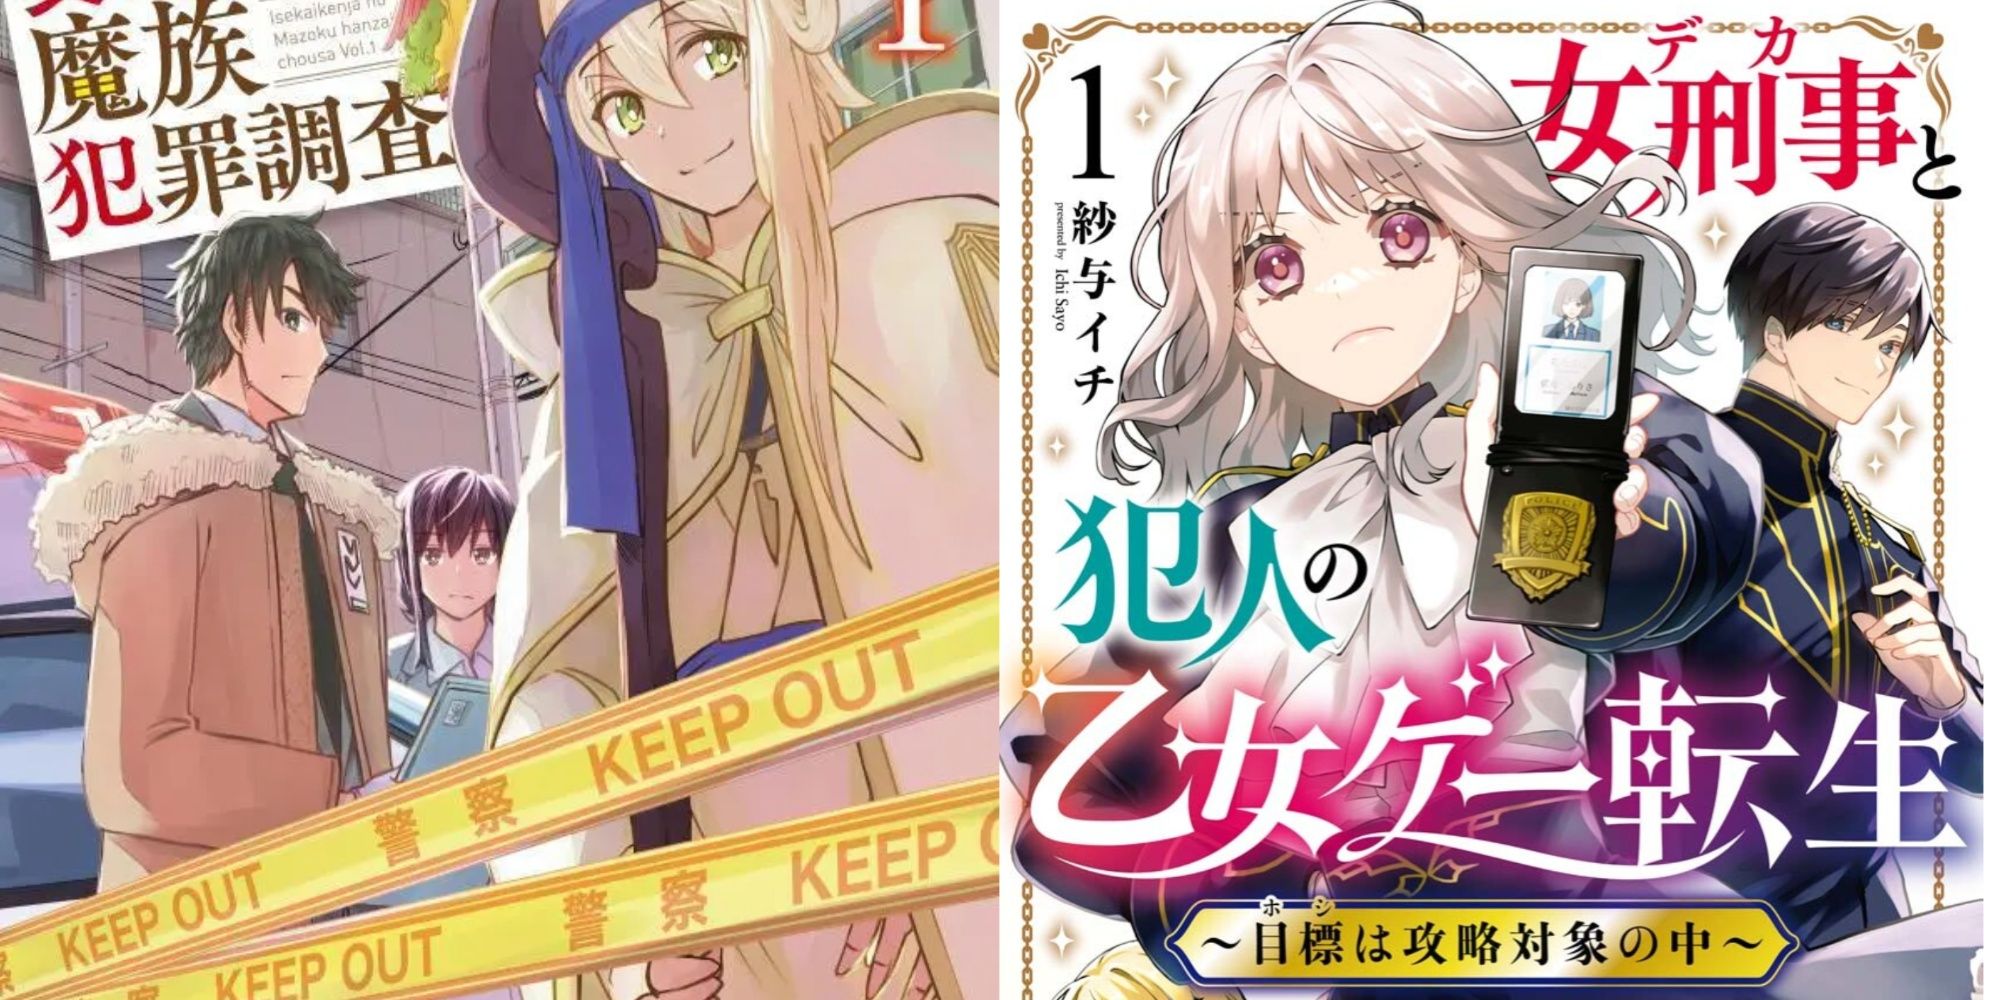 Isekai Anime and Manga With a Detective Protagonist